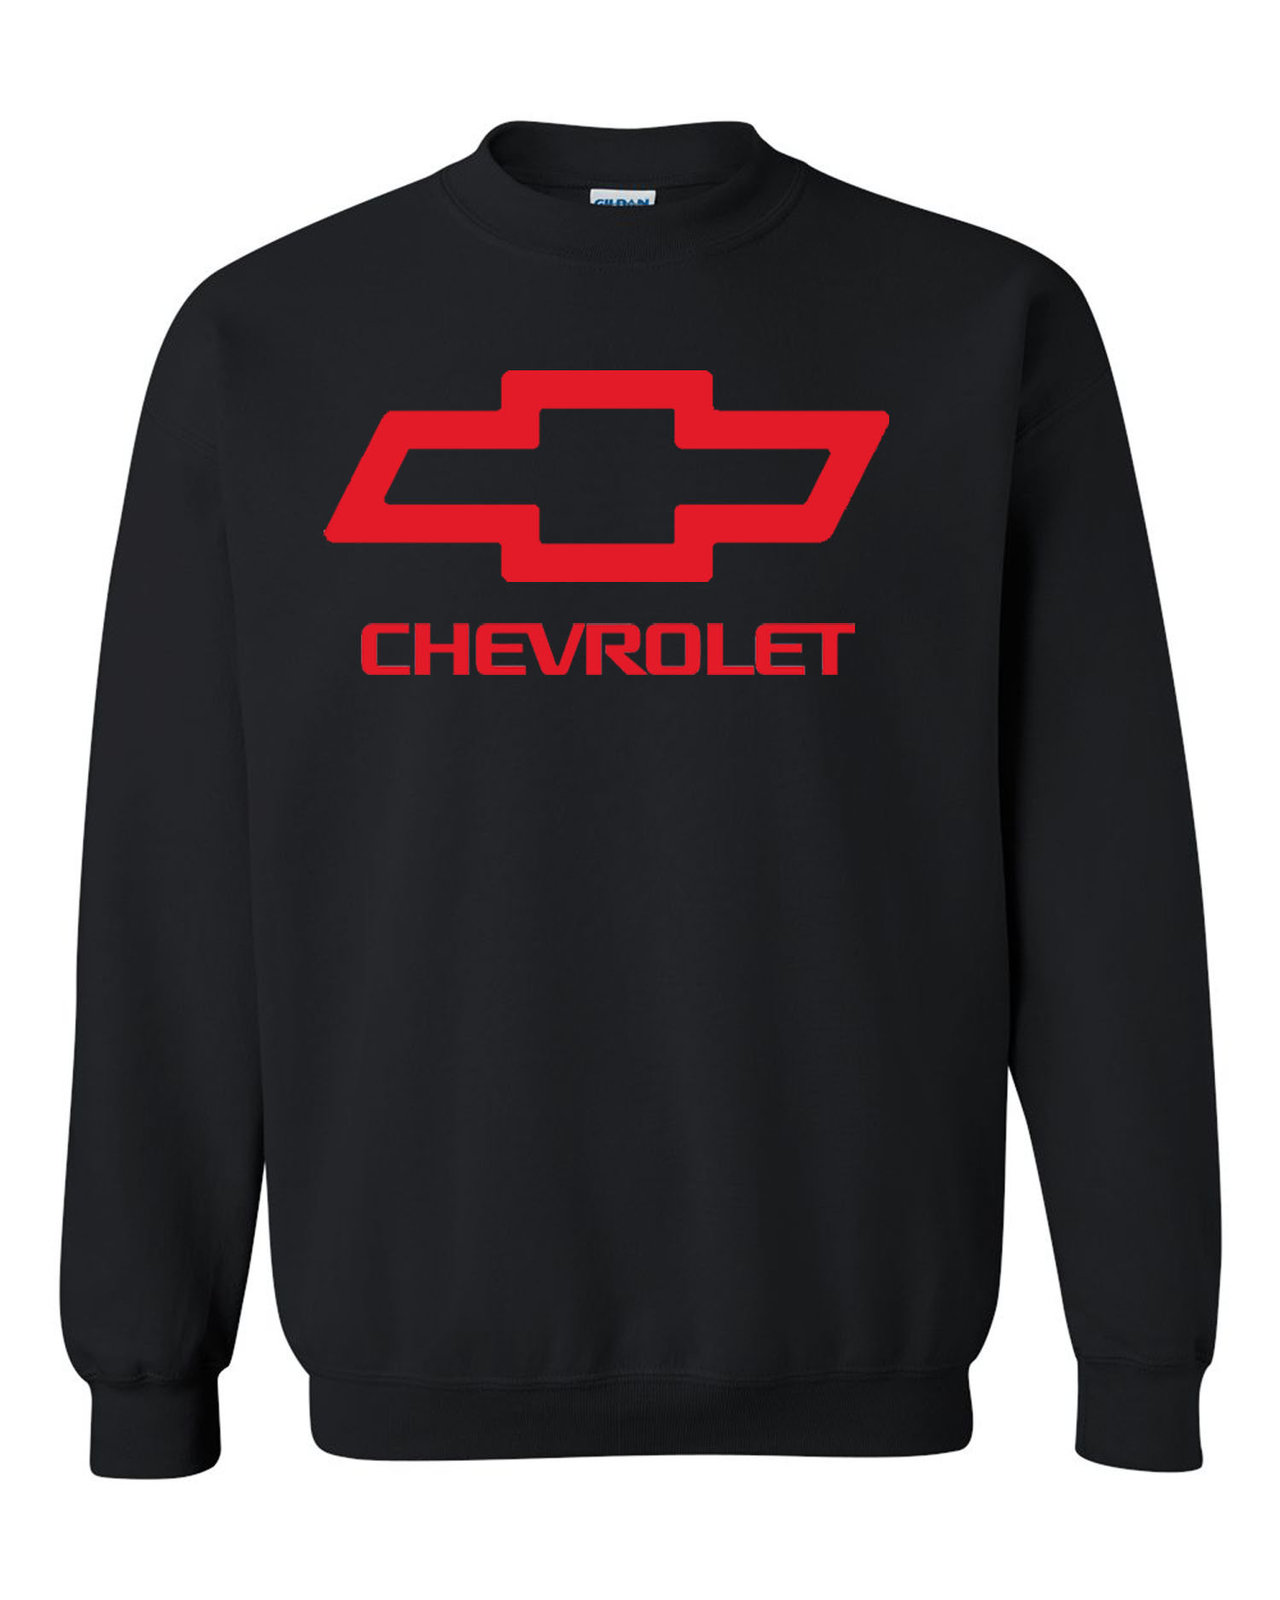 G&i/inc International Concepts - Red big chevy sweatshirt chevrolet unisex black crewneck sweatshirt tee